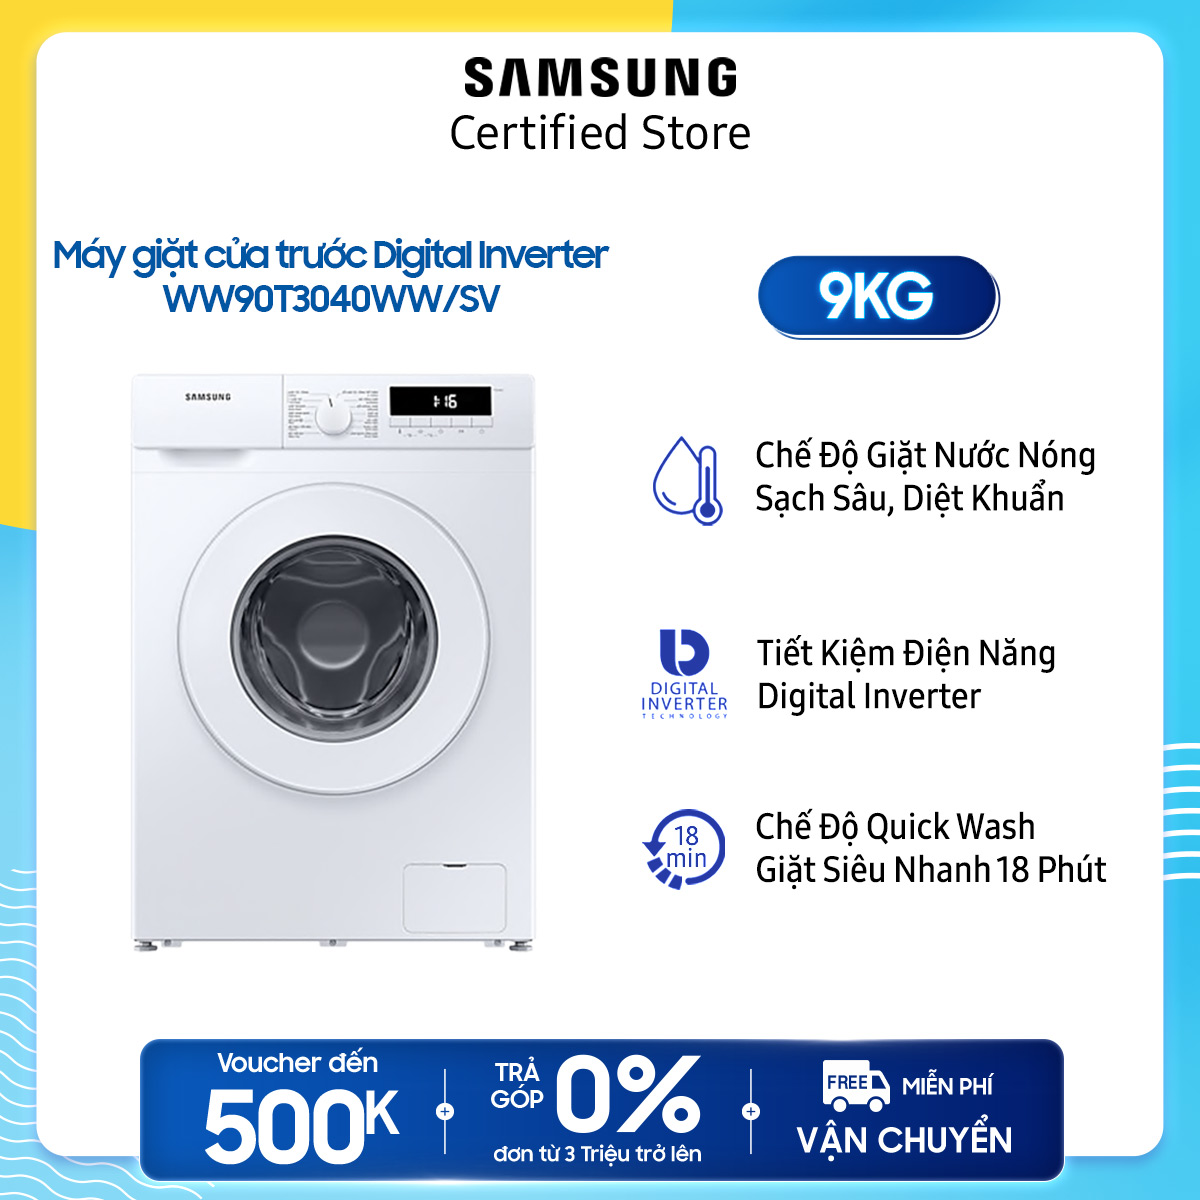 [VOUCHER 12% Upto 2 triệu] [Trả góp 0%]Máy giặt Samsung cửa trước Digital Inverter 9kg (WW90T3040WW)